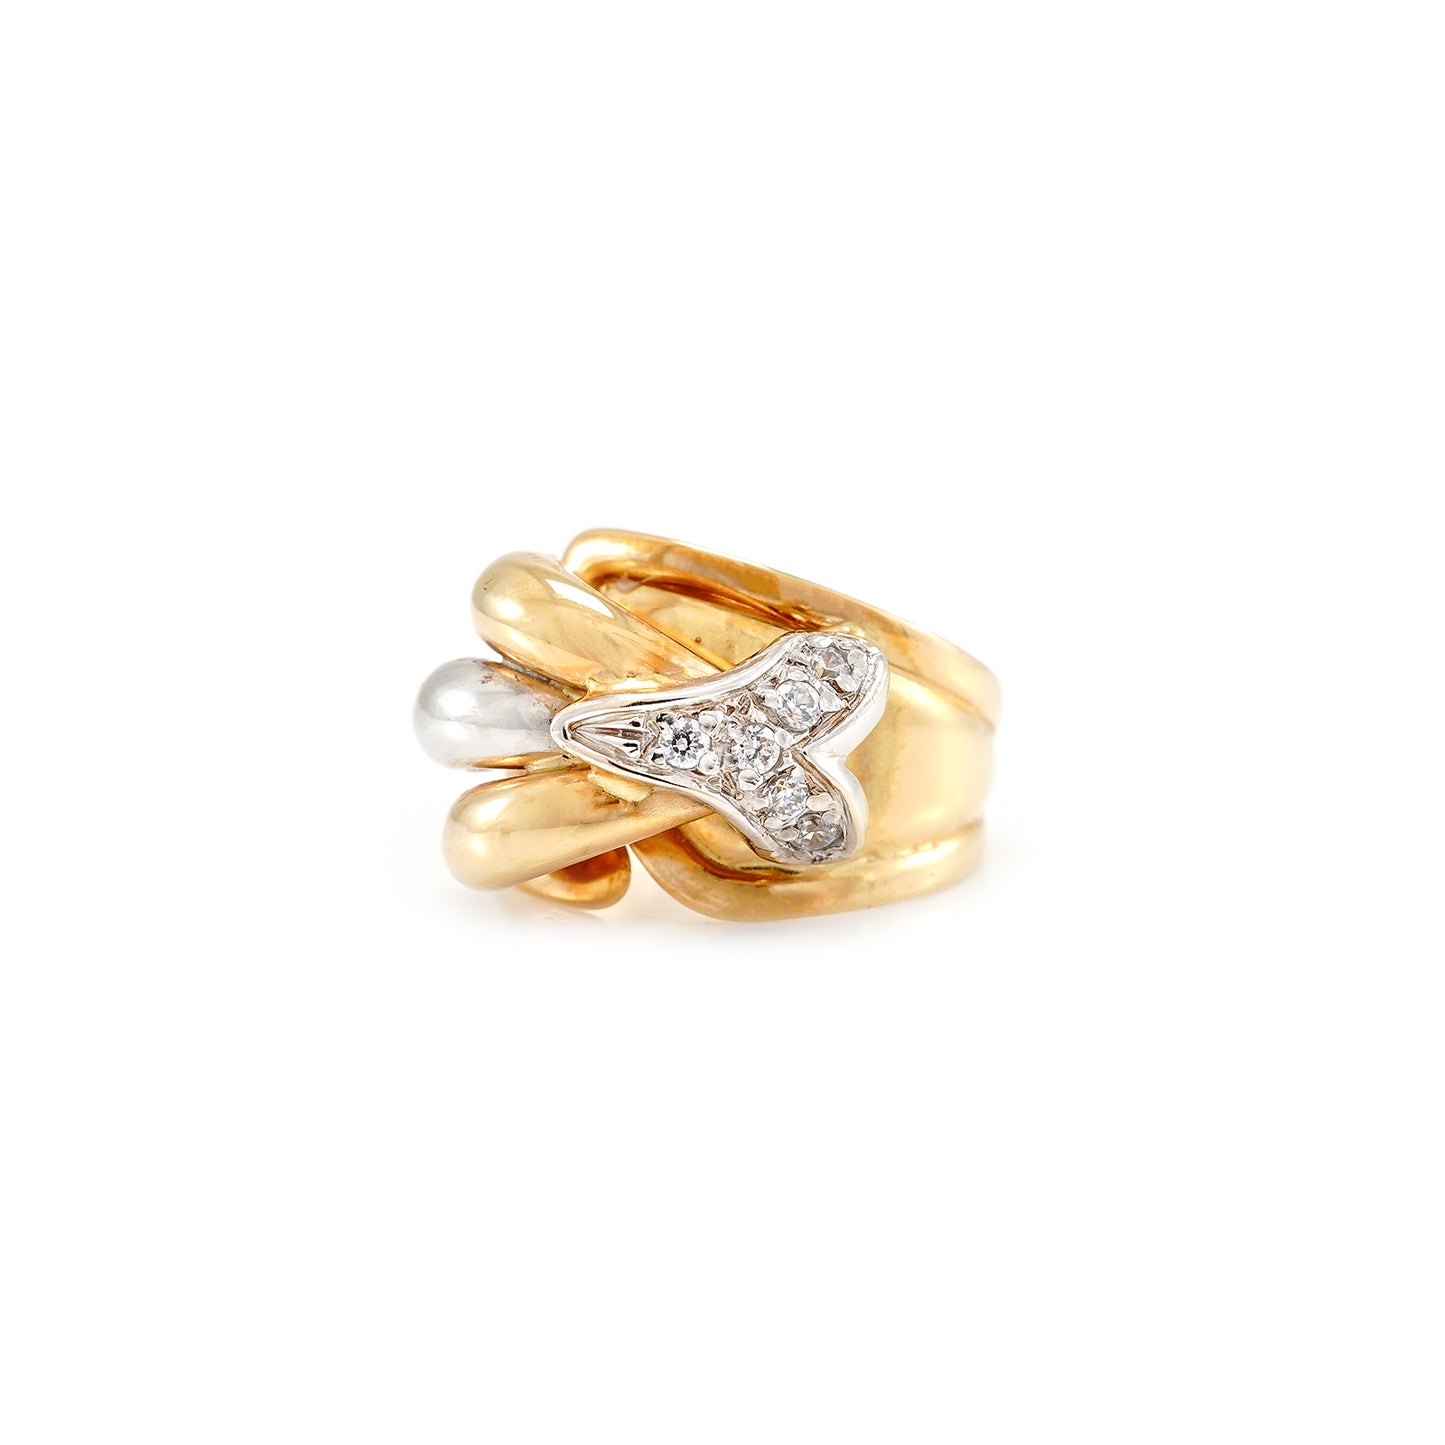 extravagant bicolor gold ring zirconia women's ring women's jewelry 18K gold ring